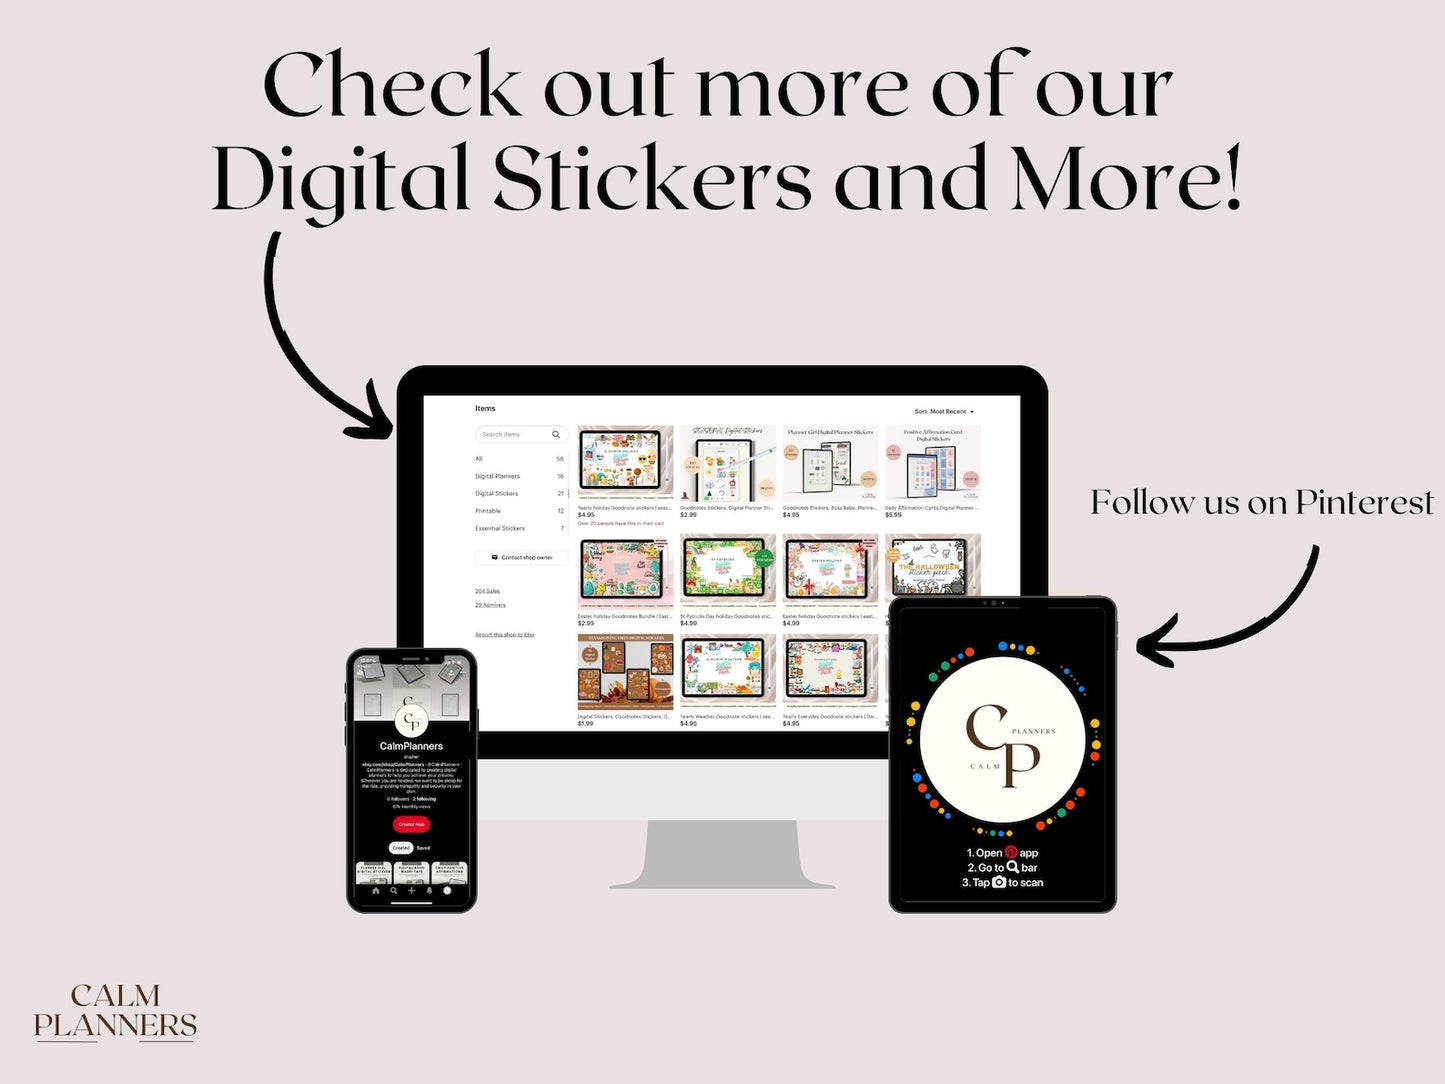 300+ February Digital Stickers